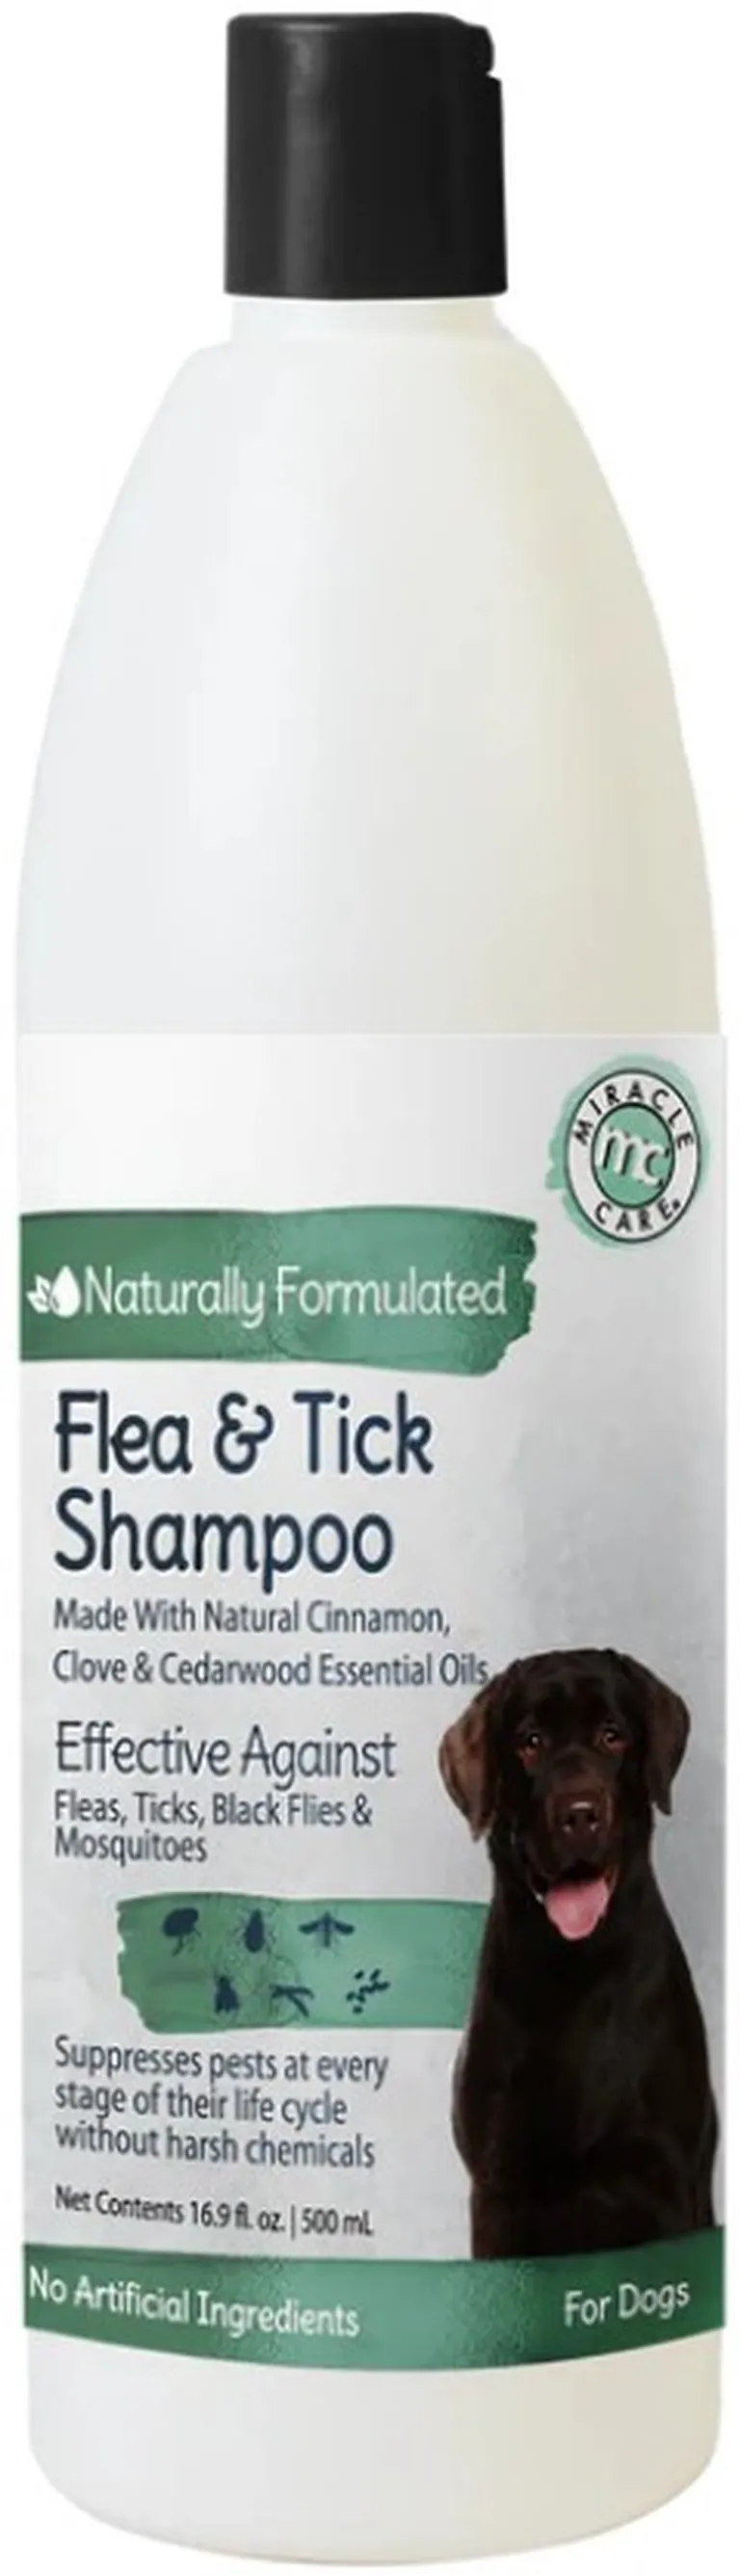 Miracle Care Natural Flea and Tick Shampoo Photo 2